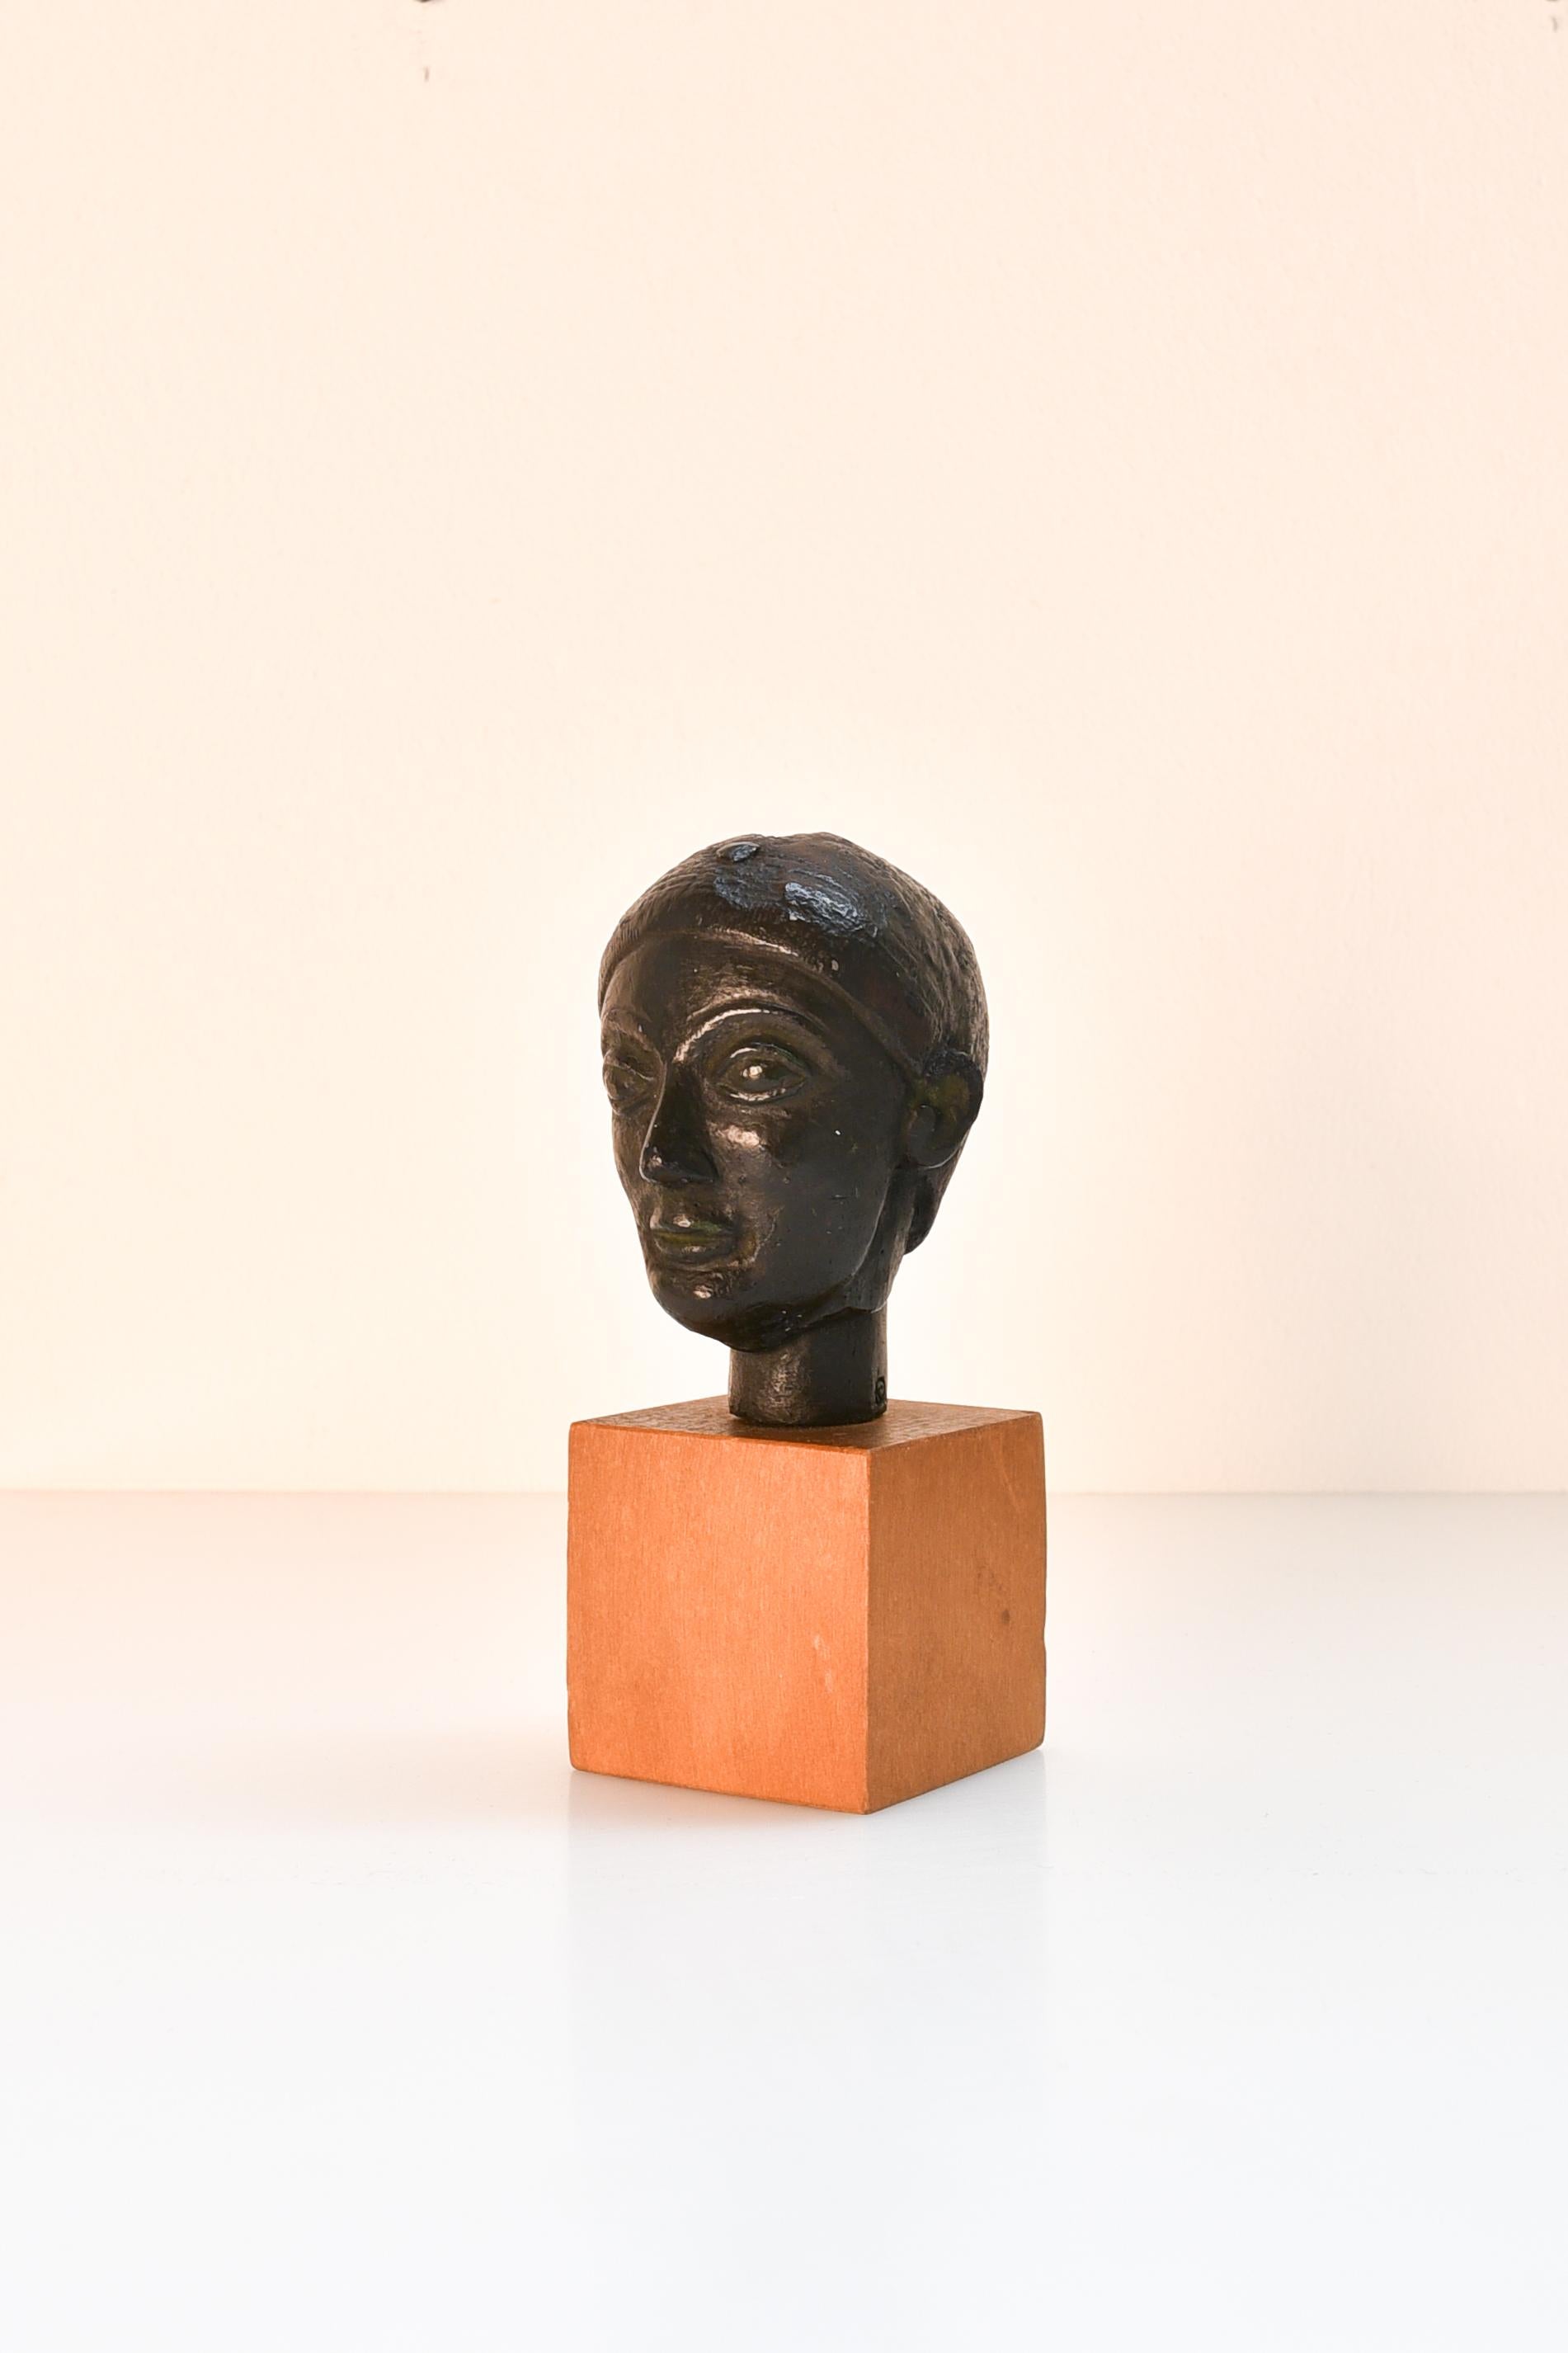 Belgian 20th century miniature black terracotta head of a woman, mounted on wood